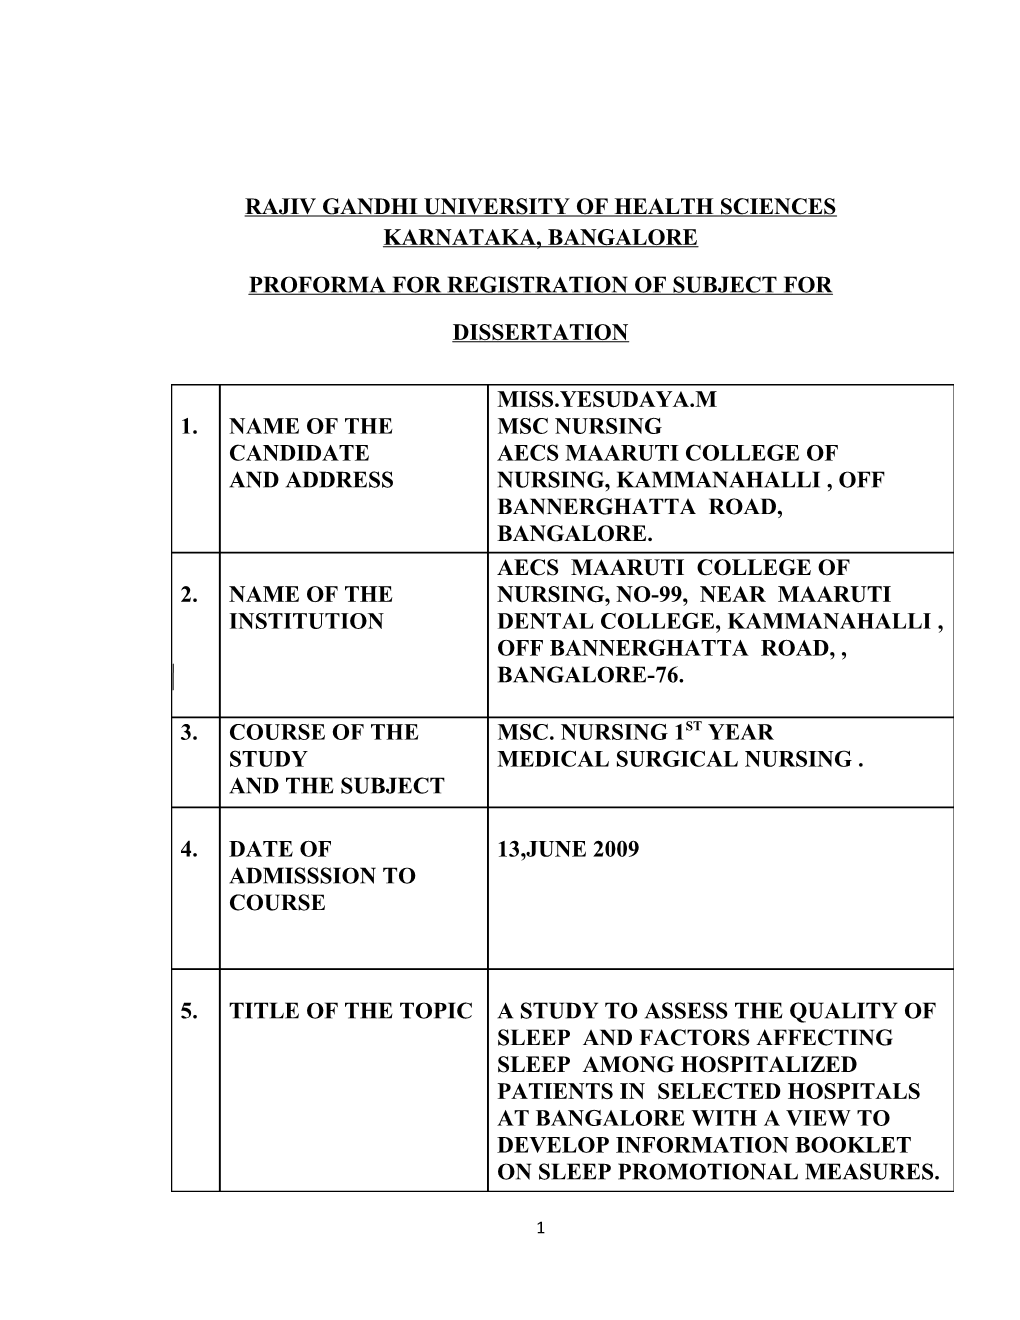 Rajiv Gandhi University of Health Sciences Karnataka, Bangalore s26